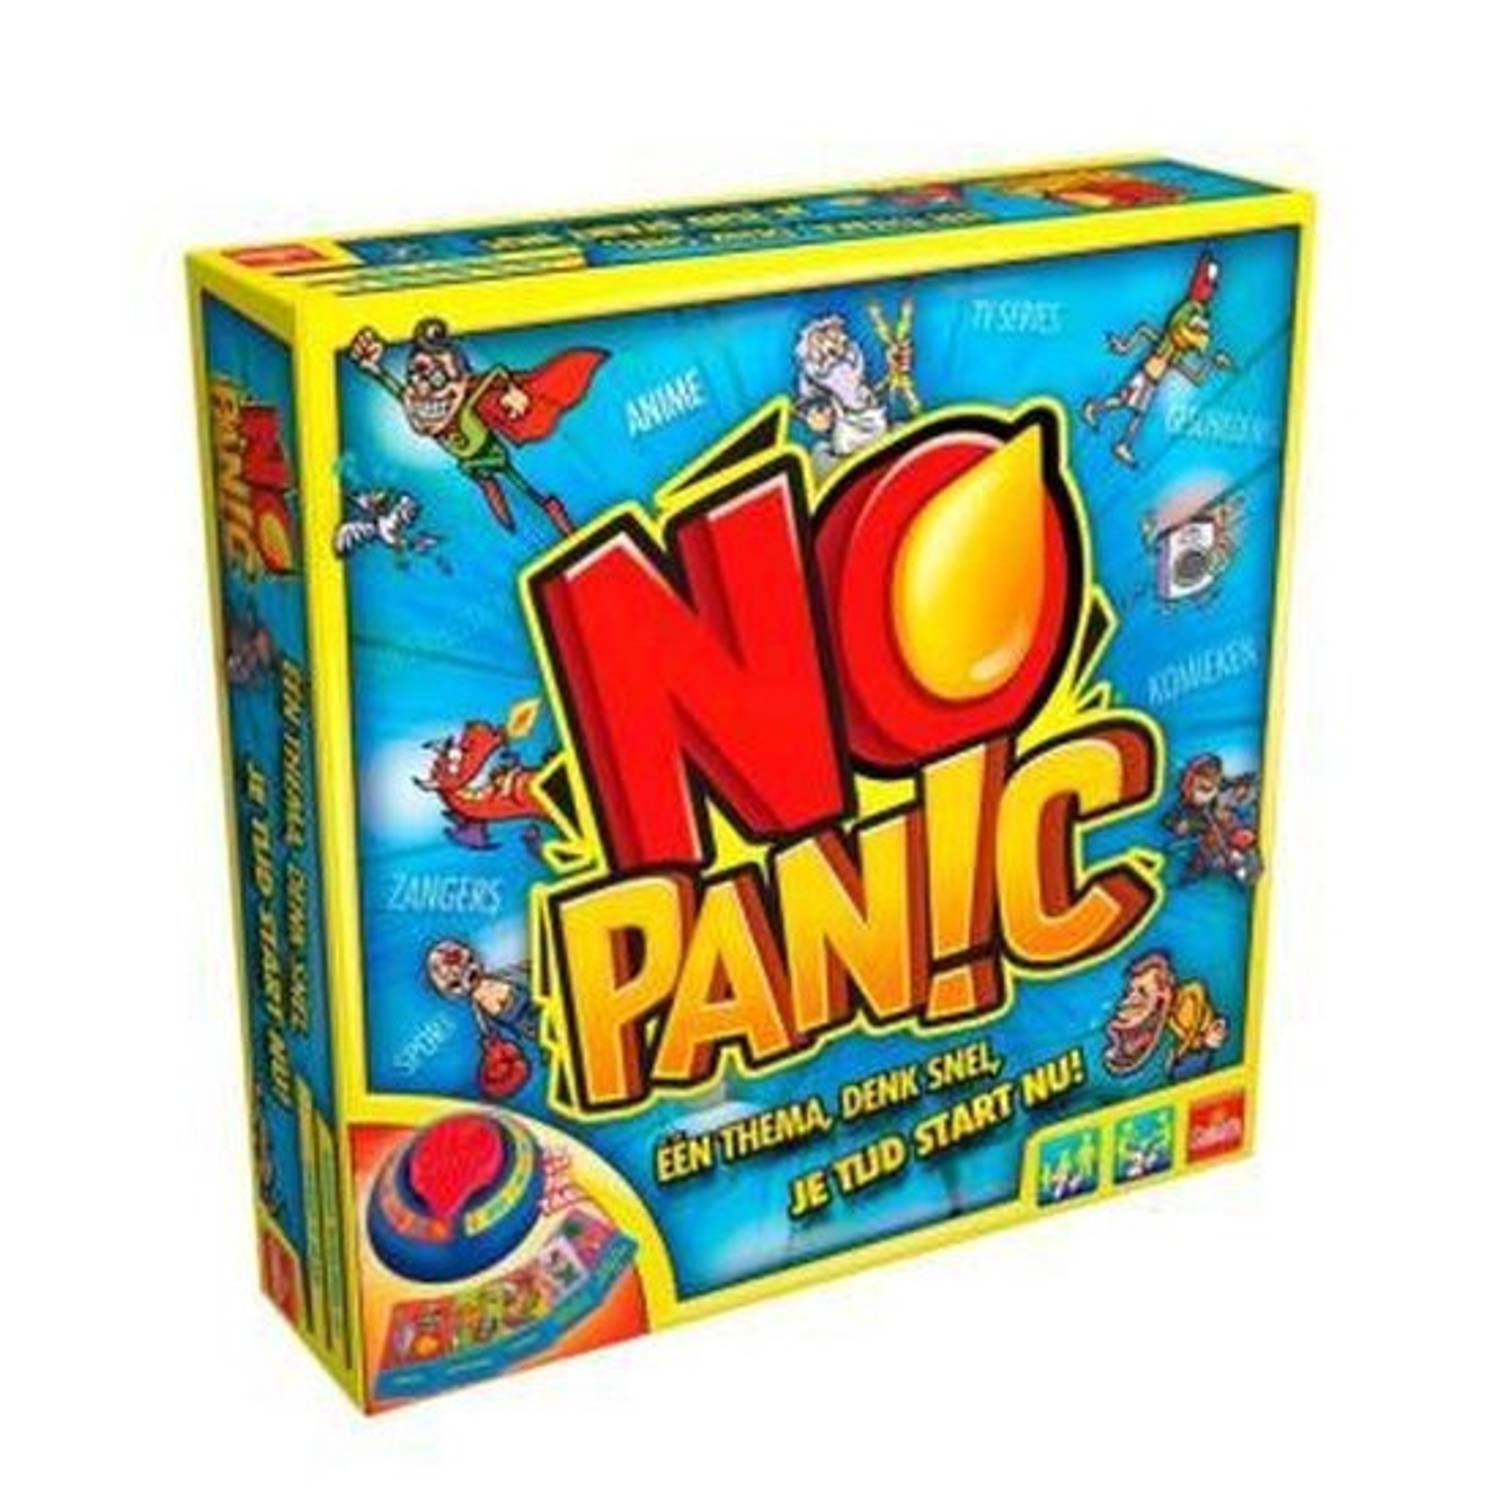 No Panic Family (NL)